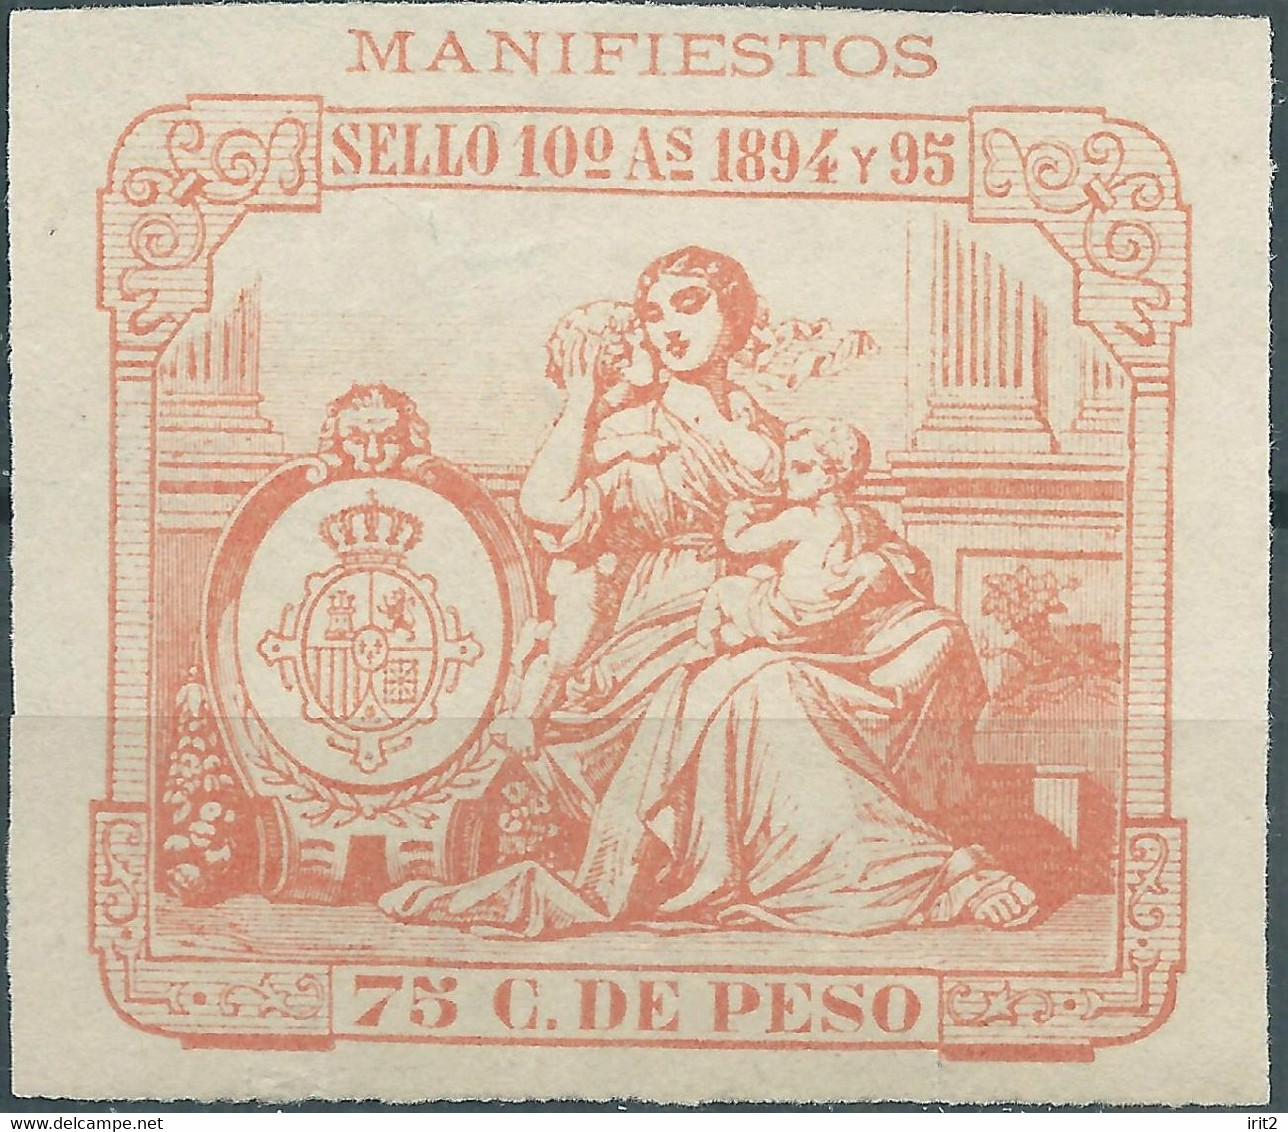 Puerto Rico-Portorico, Spanish Revenue Stamps,1894-95 Manifiestos 75c.De Peso,Mint - Porto Rico